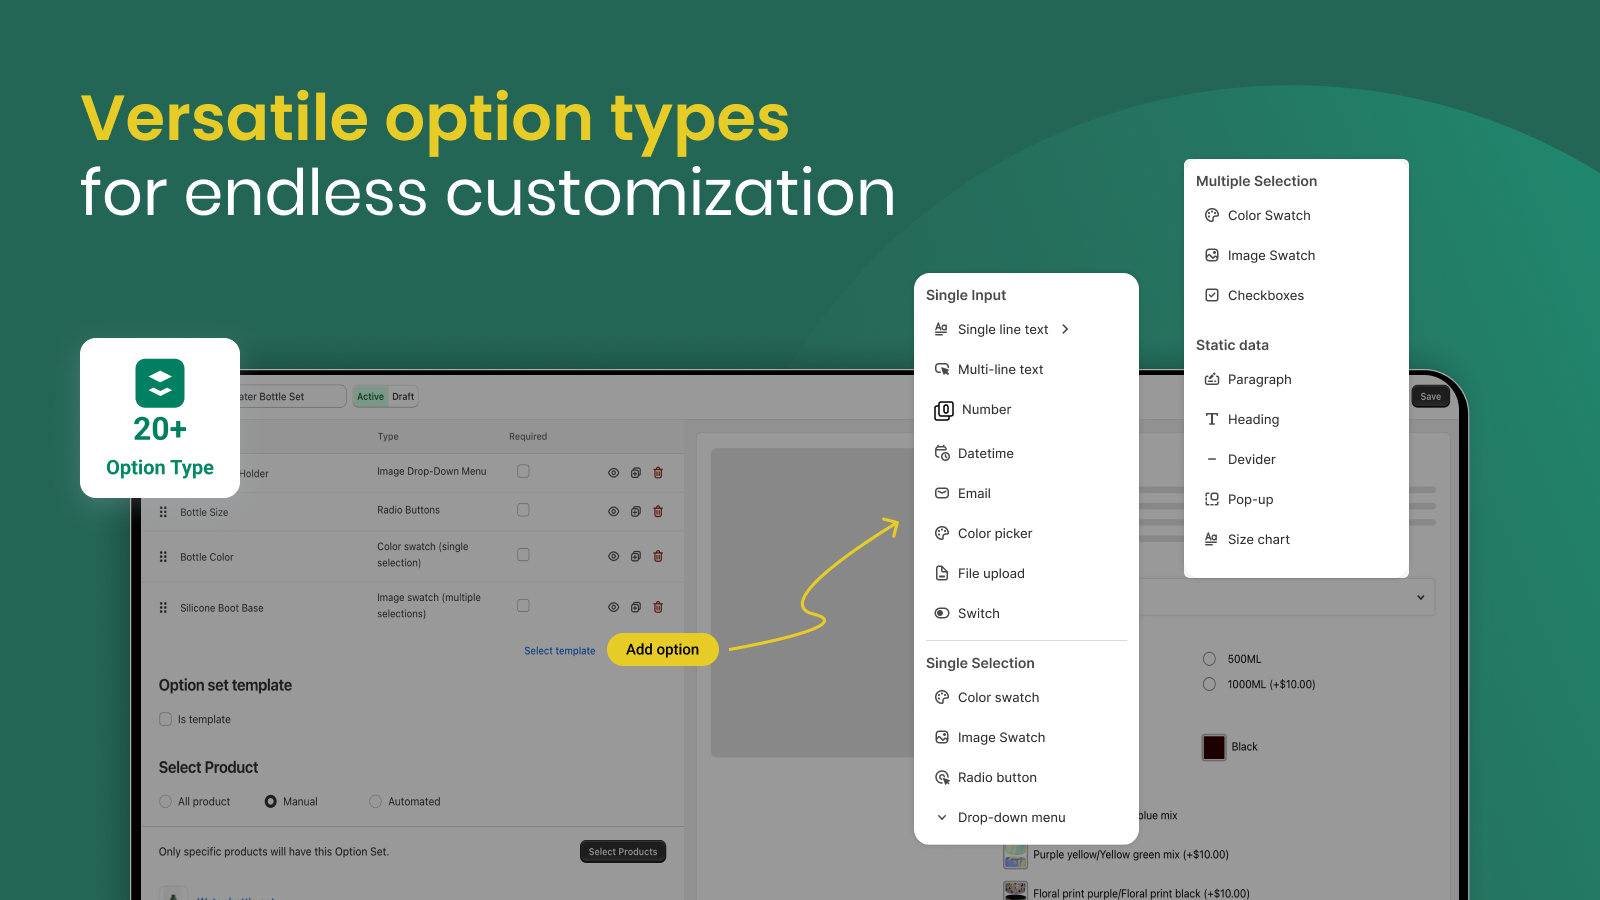 Versatile option types for endless customization